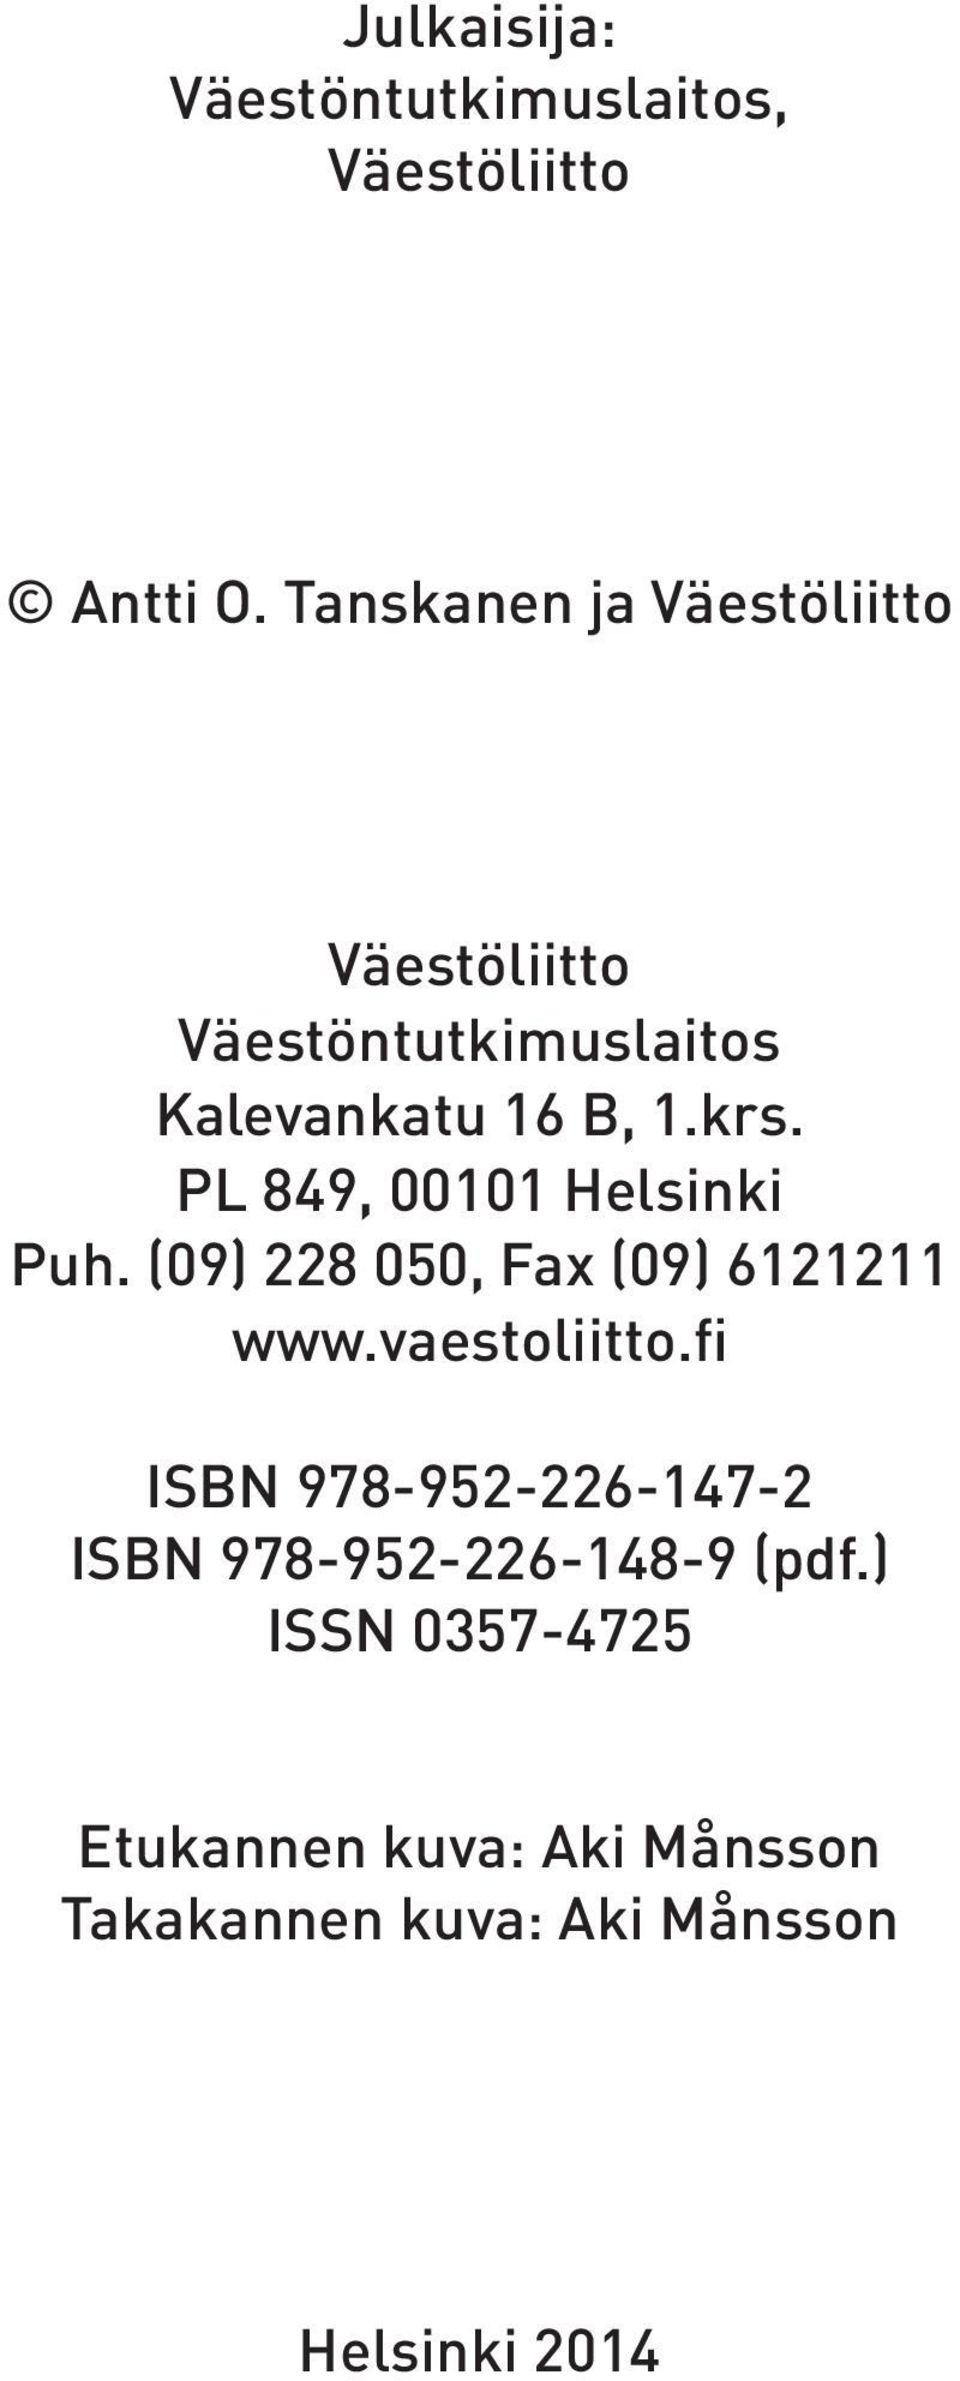 PL 849, 00101 Helsinki Puh. (09) 228 050, Fax (09) 6121211 www.vaestoliitto.